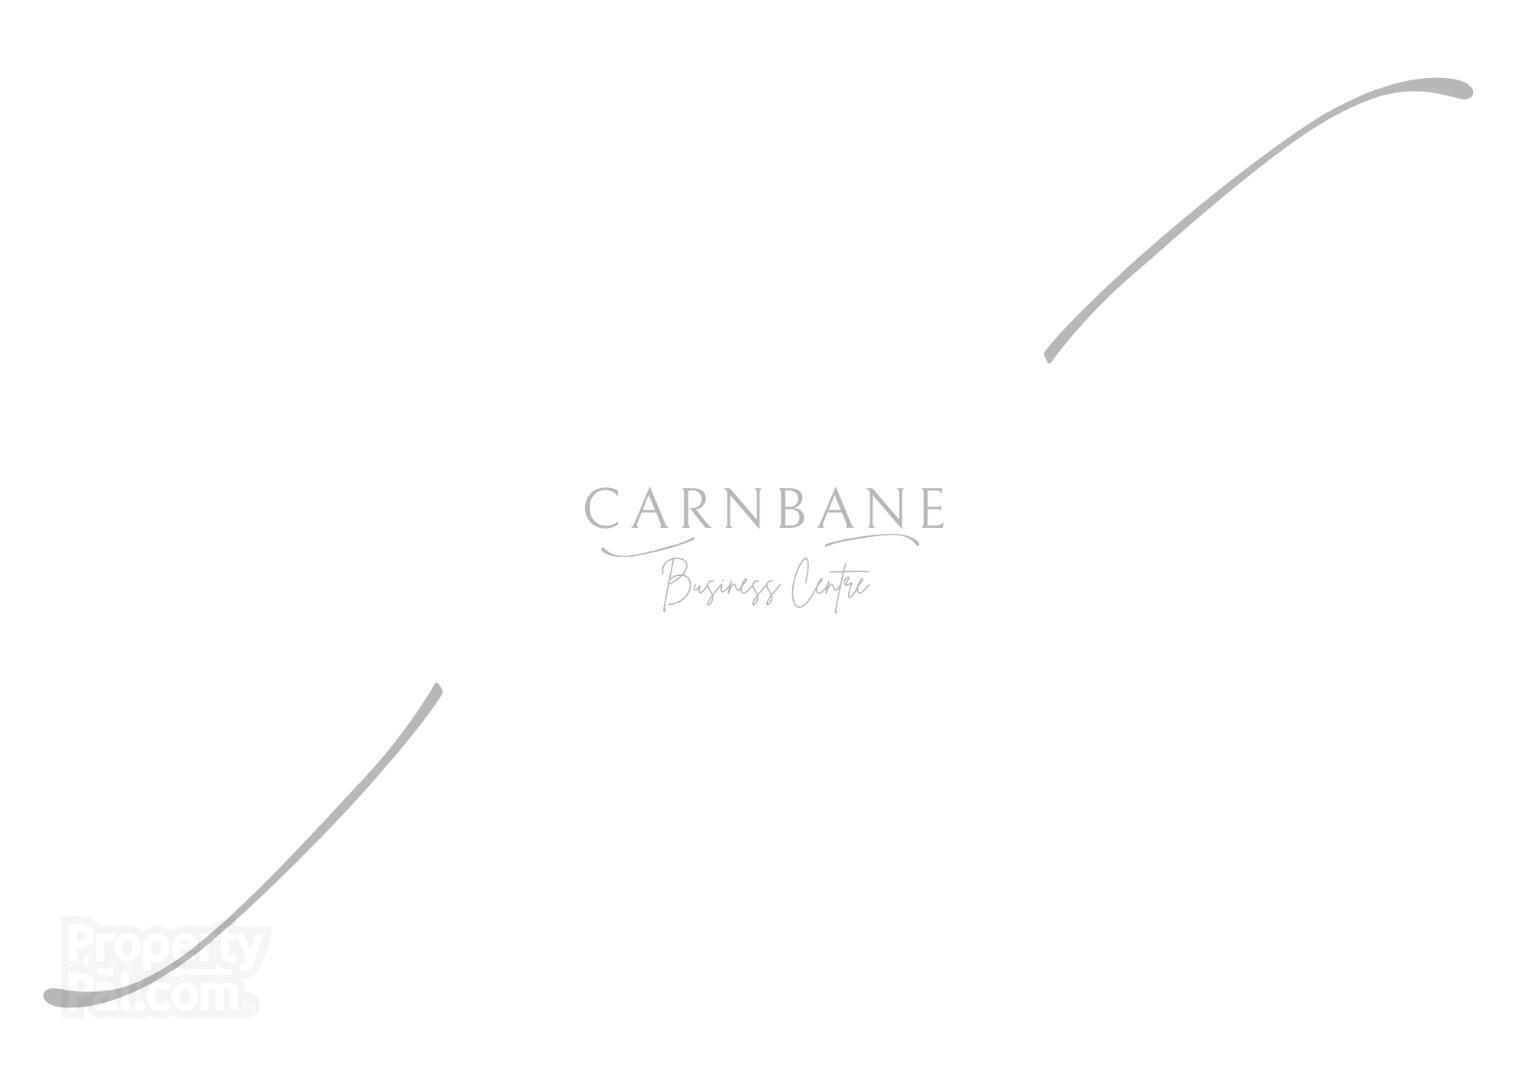 Carnbane Business Centre